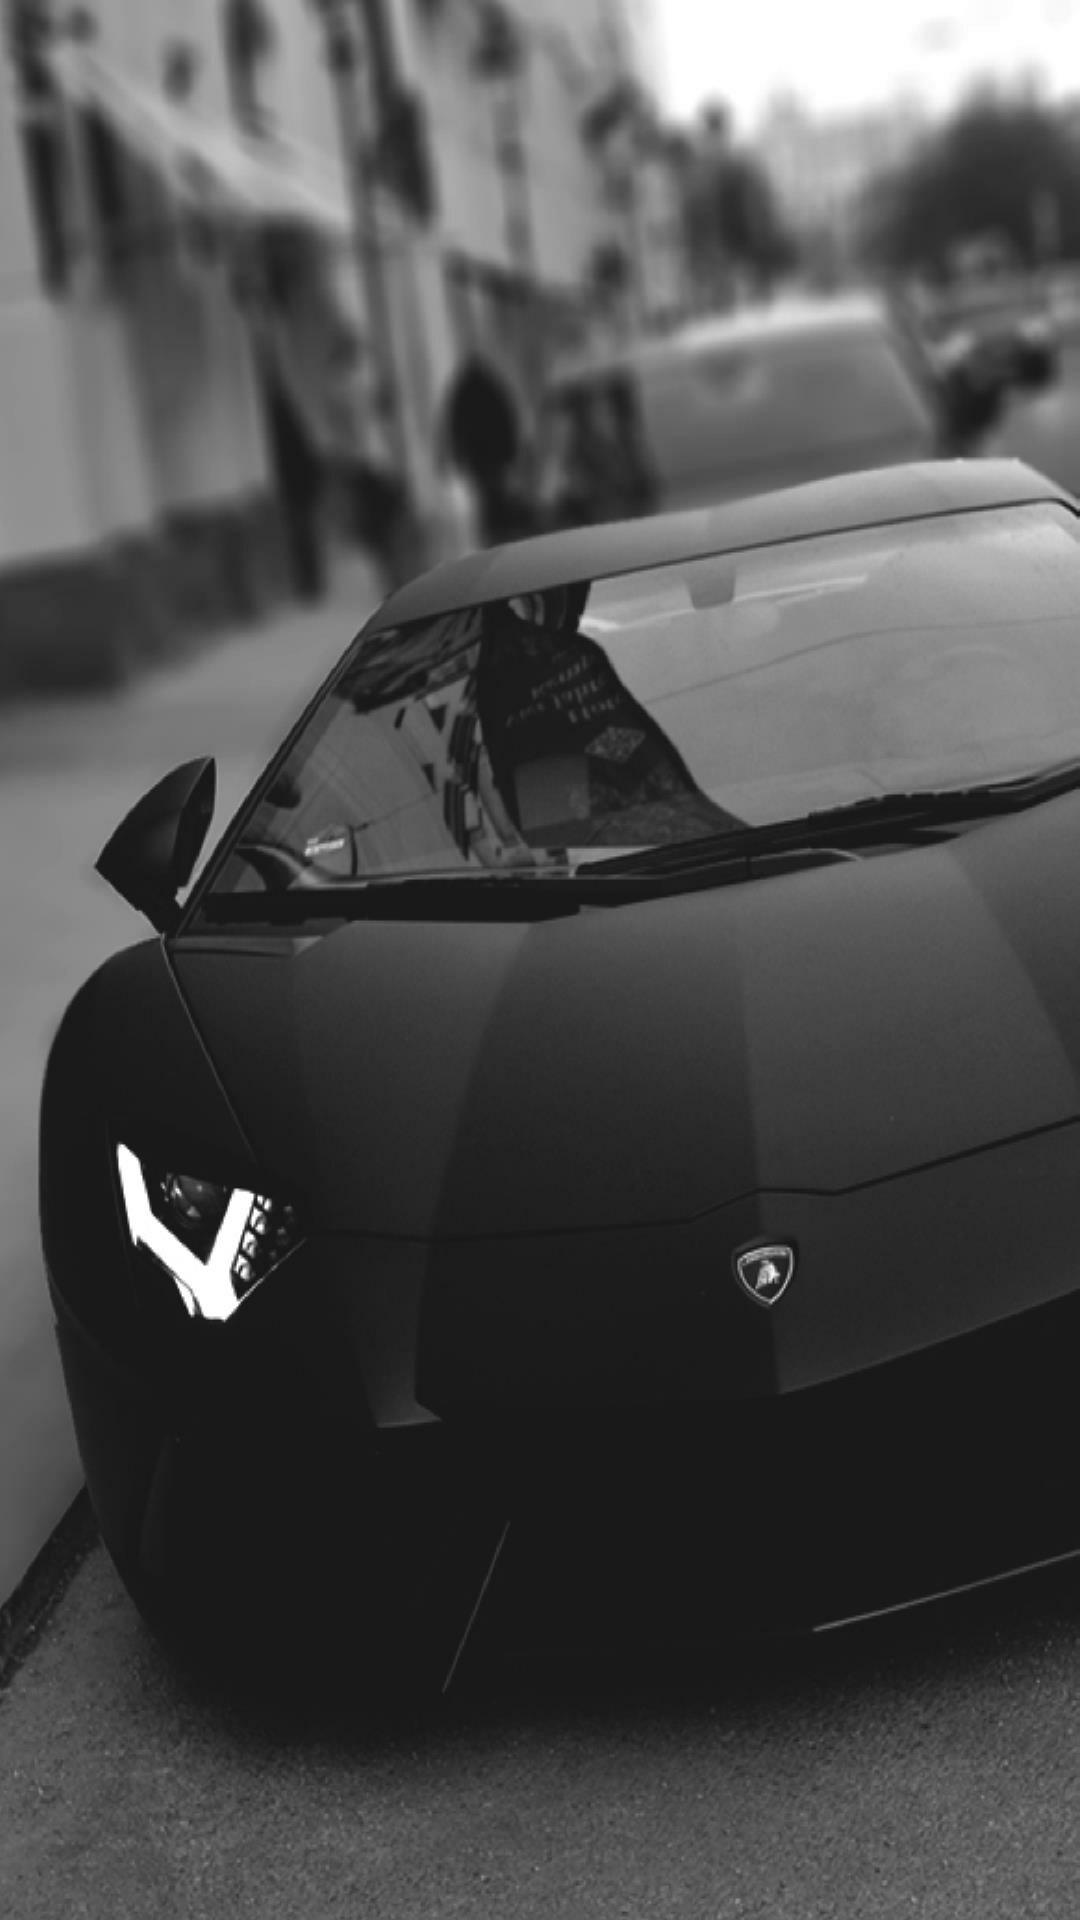 Lamborghini: An Italian car manufacturer based in Sant'Agata Bolognese. 1080x1920 Full HD Background.